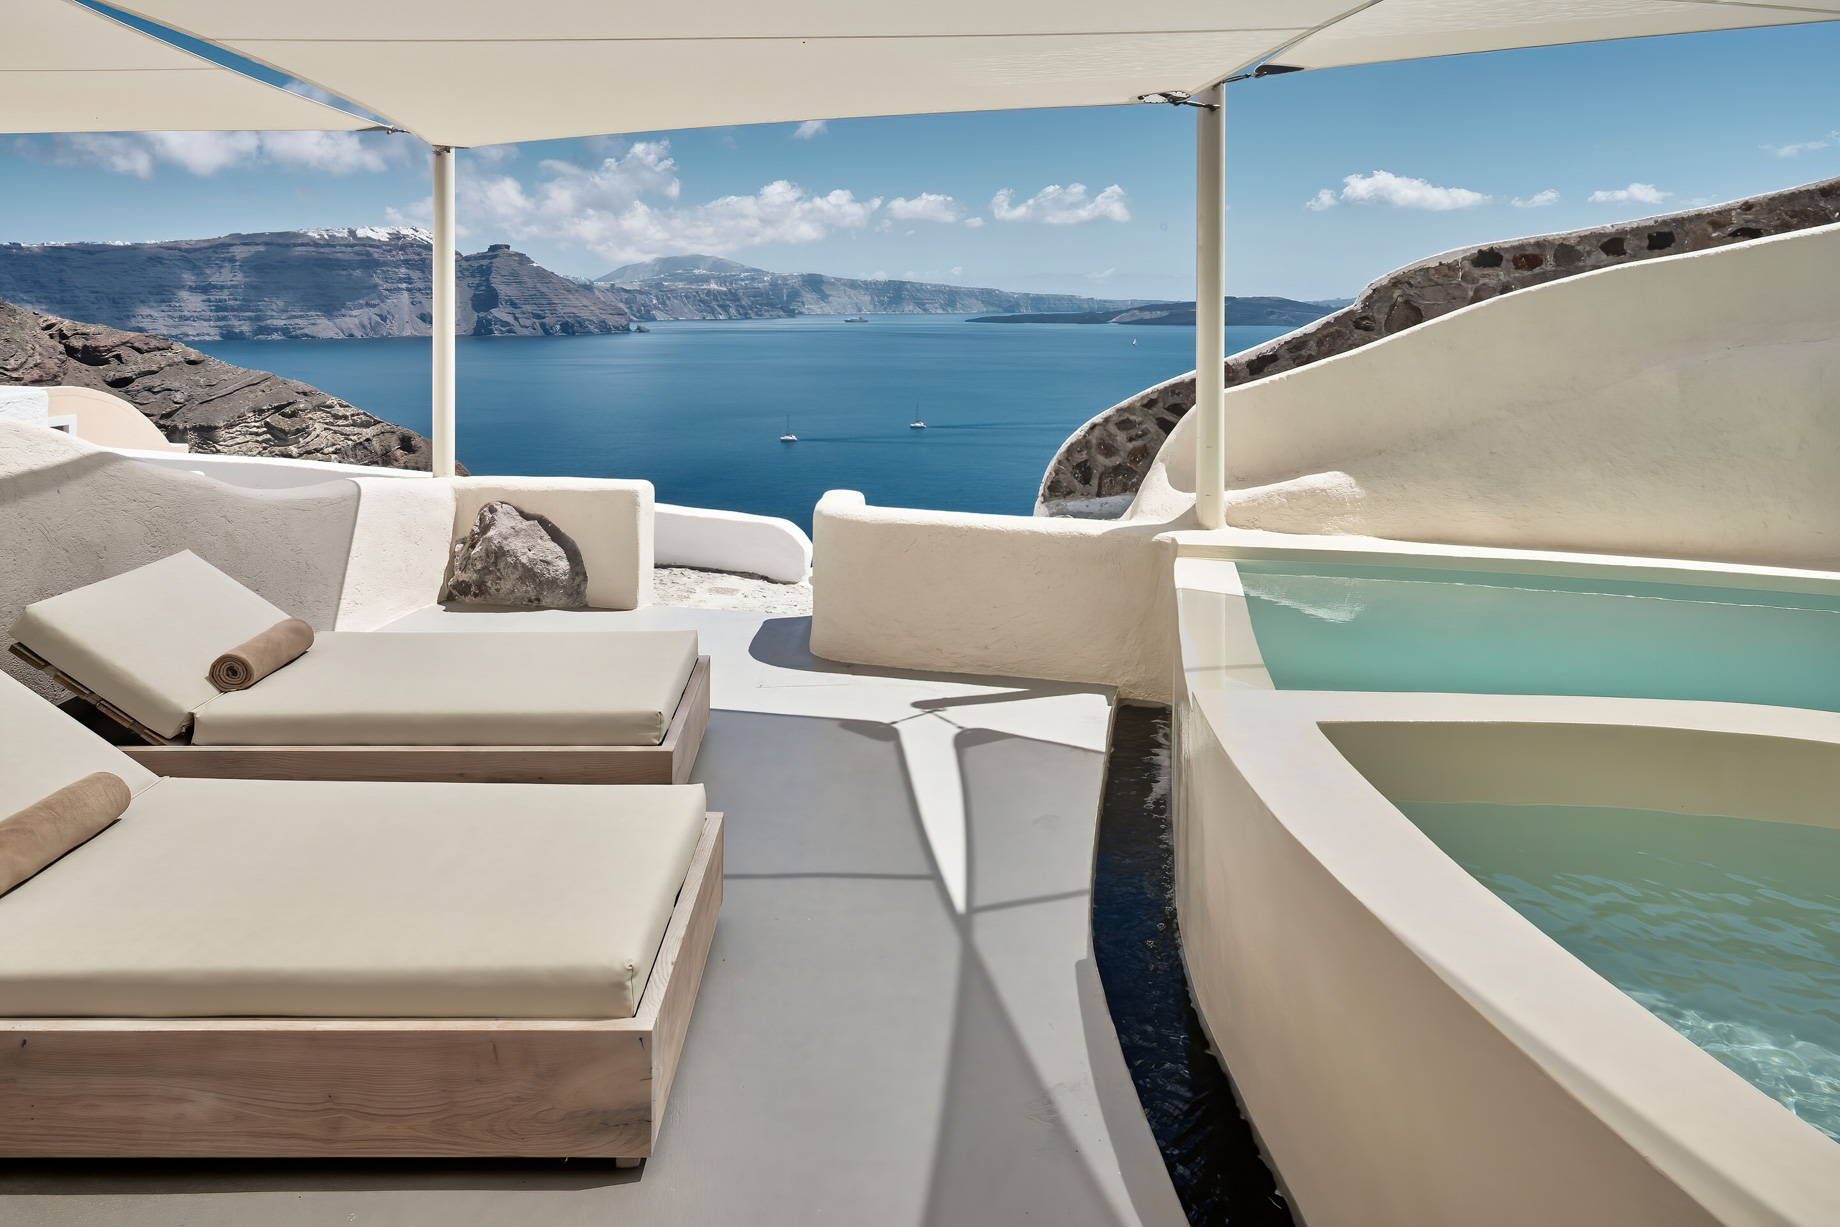 Mystique Hotel Santorini – Oia, Santorini Island, Greece – Mystery Villa Private Ocean View Deck